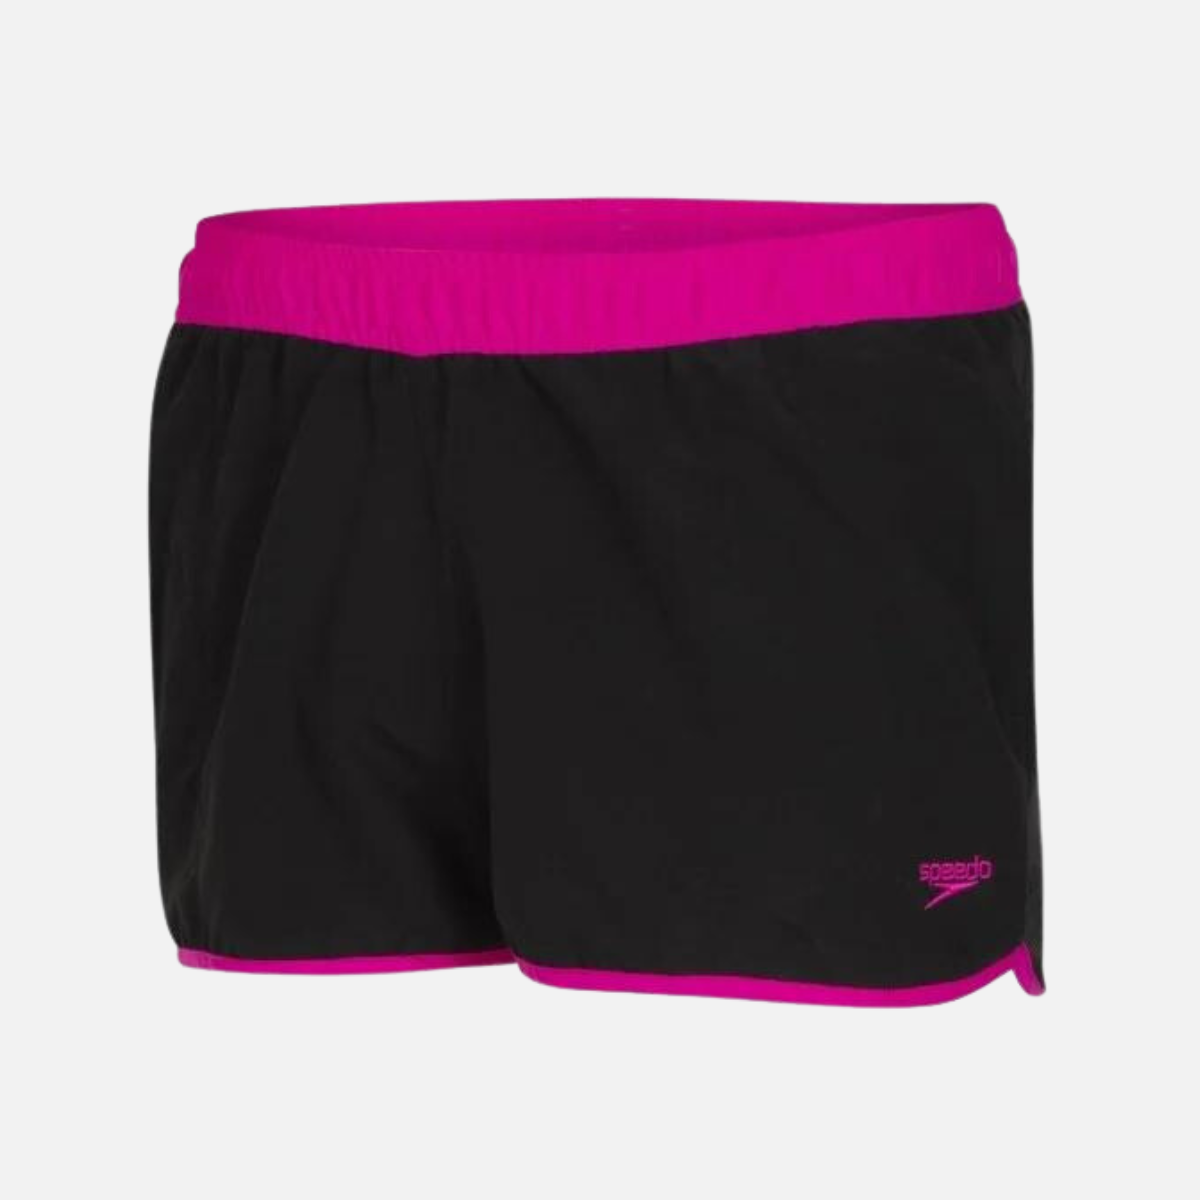 Speedo Water Swim 12-inch Women's Shorts -Black/Electric Pink